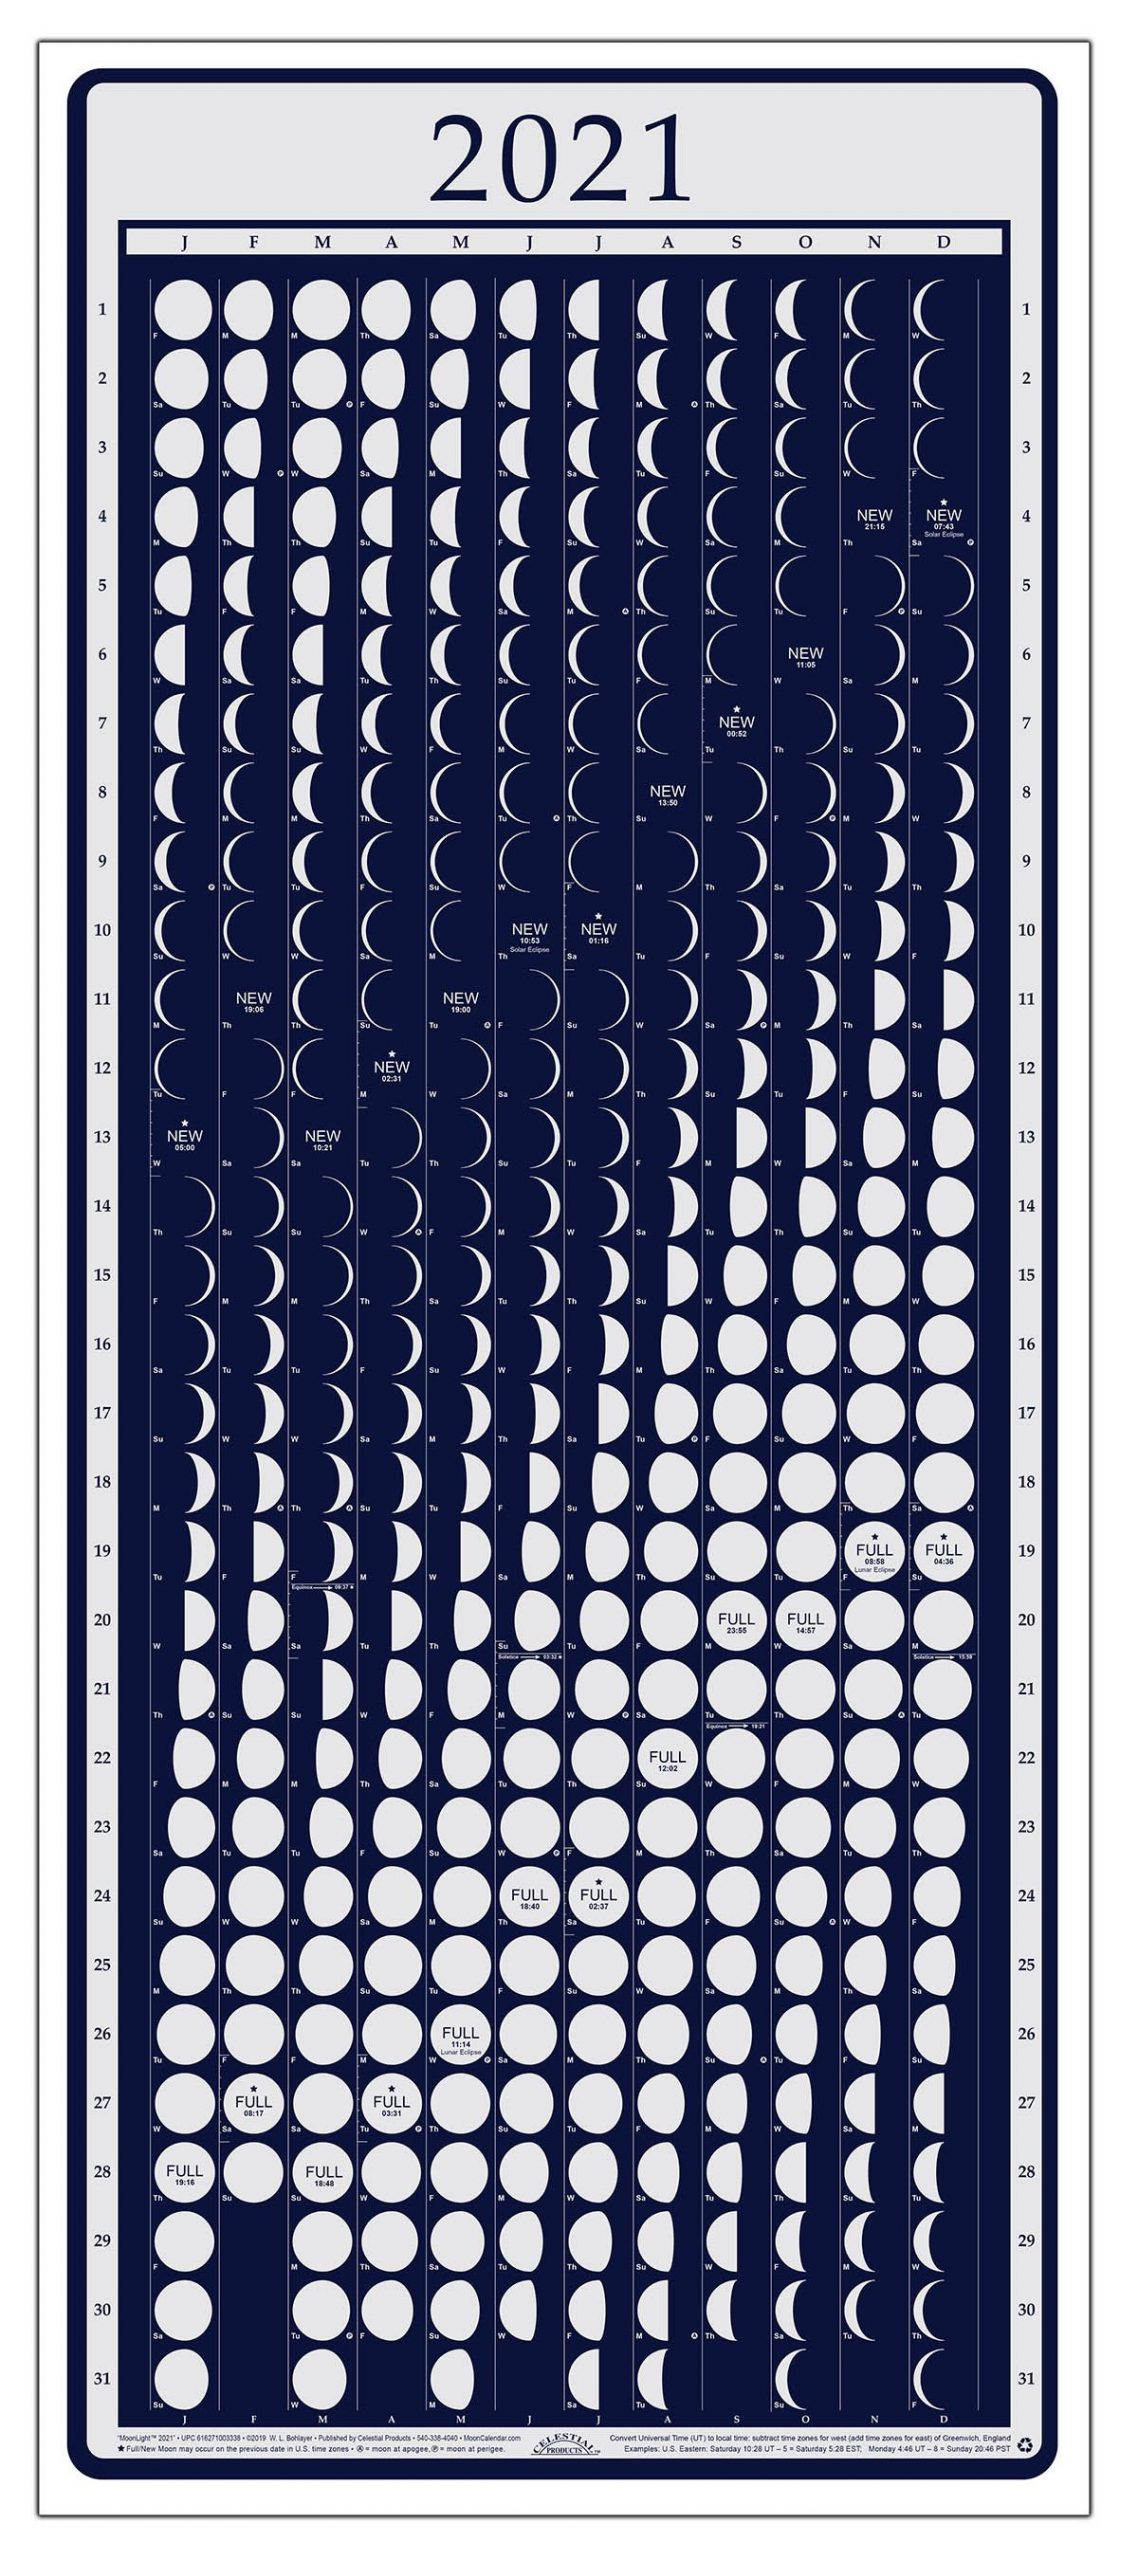 2021 Moonphase Calendar Moon Calendar December 2021